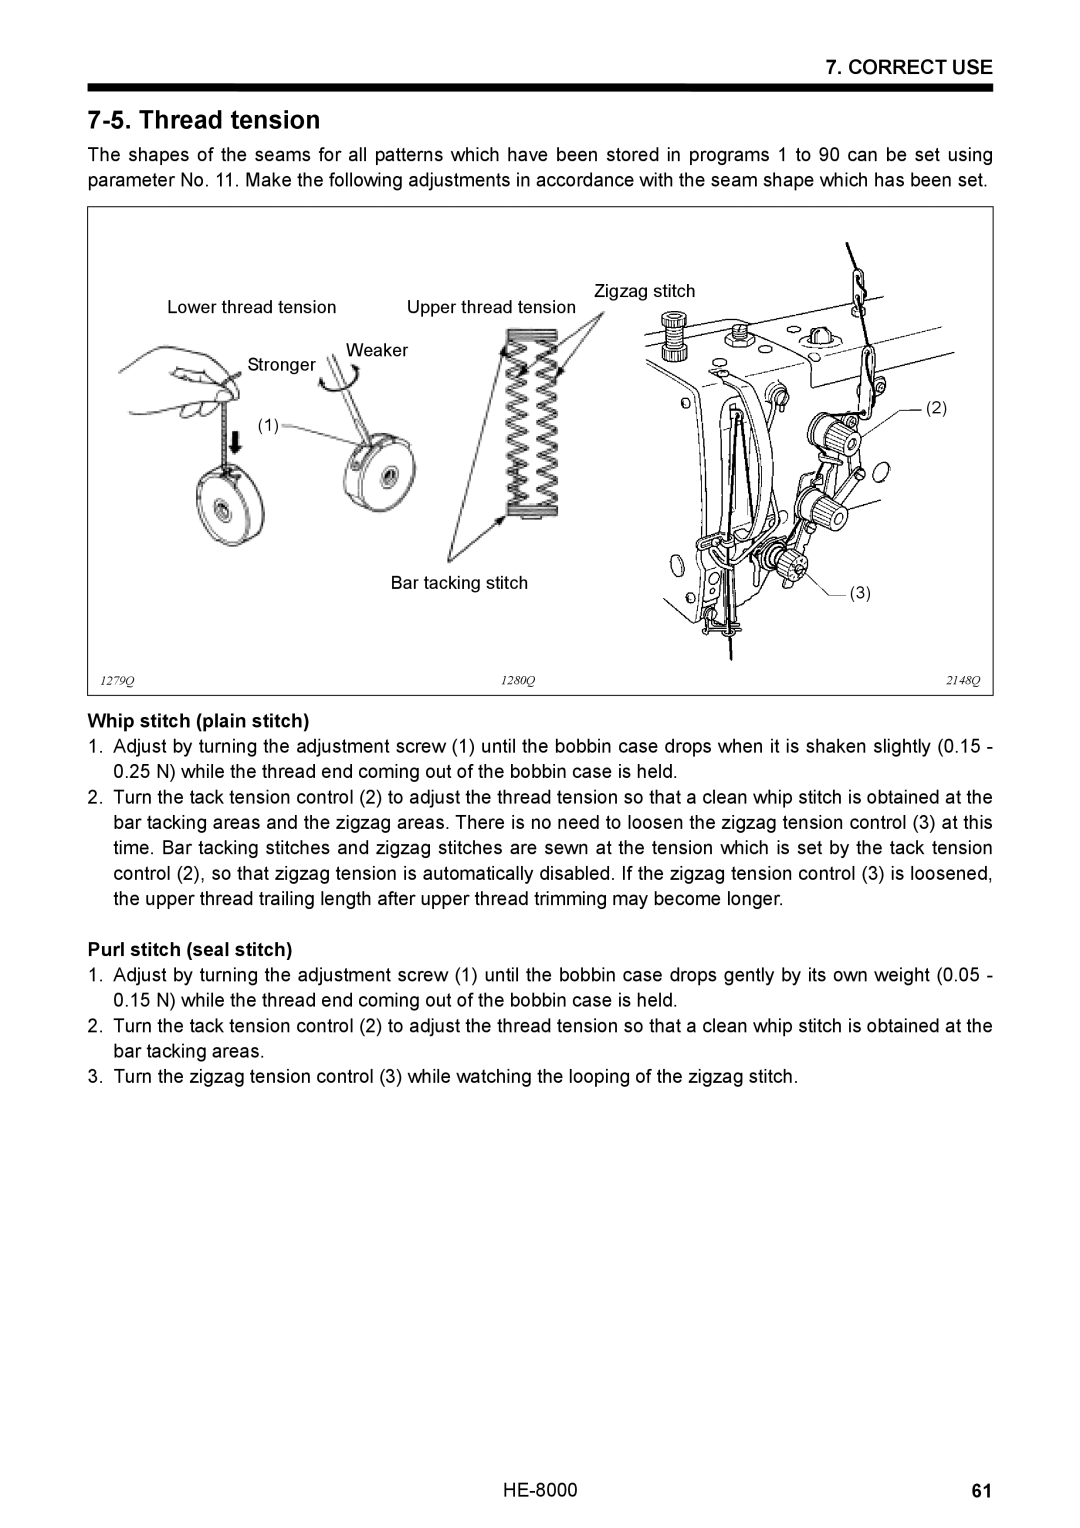 Motorola LH4-B800E, HE-8000 I instruction manual Thread tension 